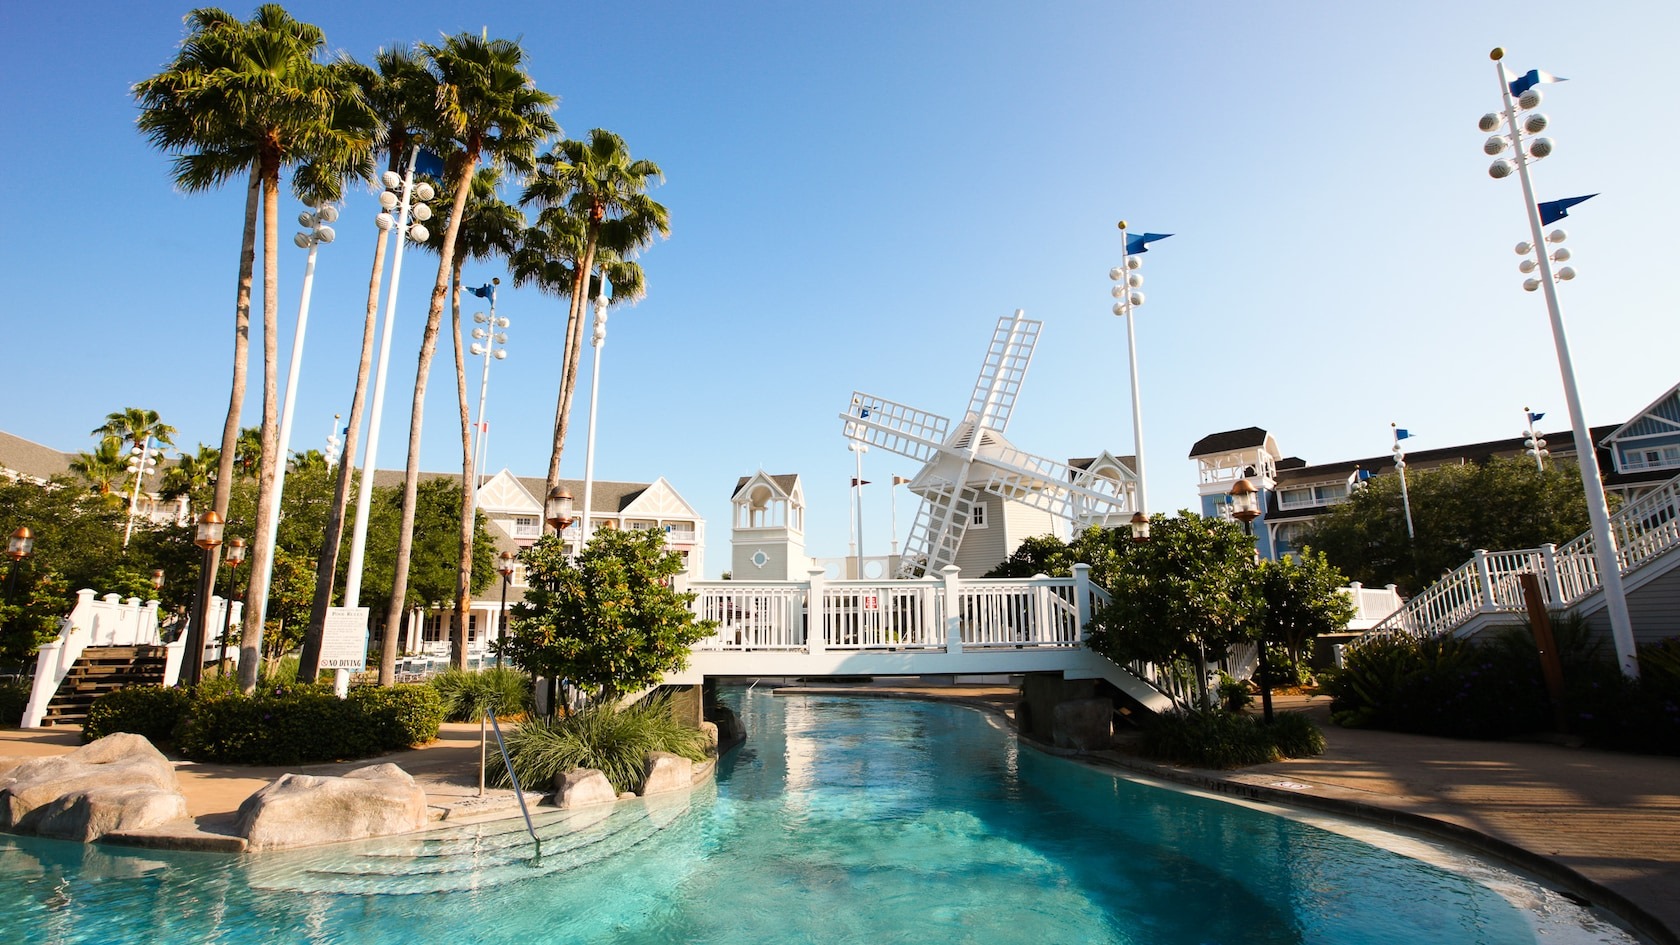 Pools at Disney's Beach Club Resort 